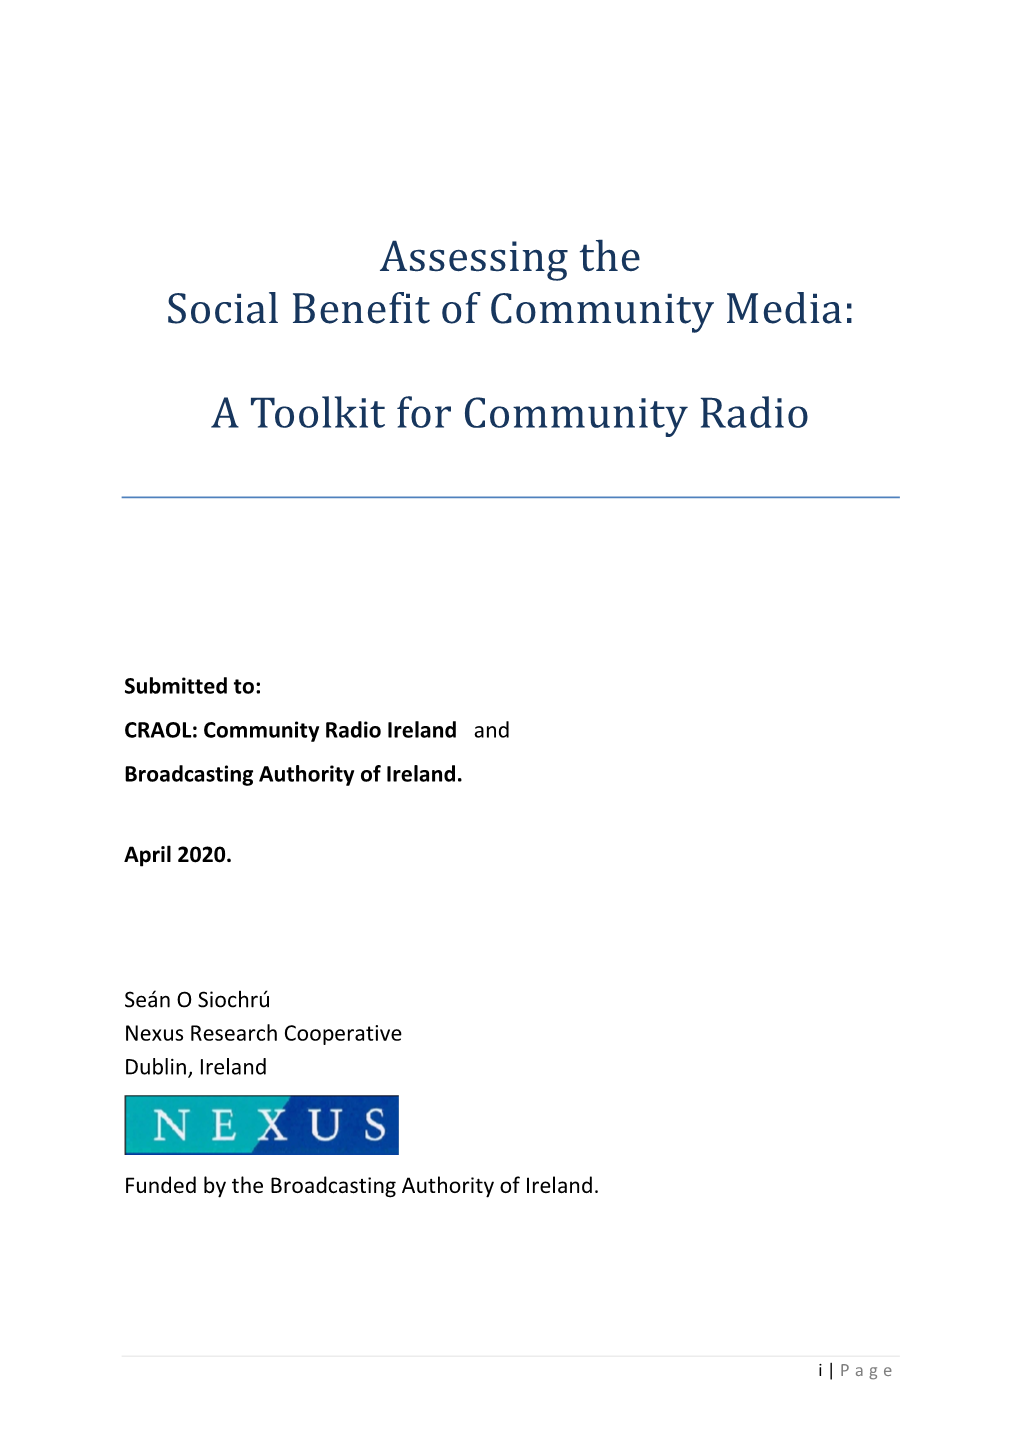 Assessing the Social Benefit of Community Media